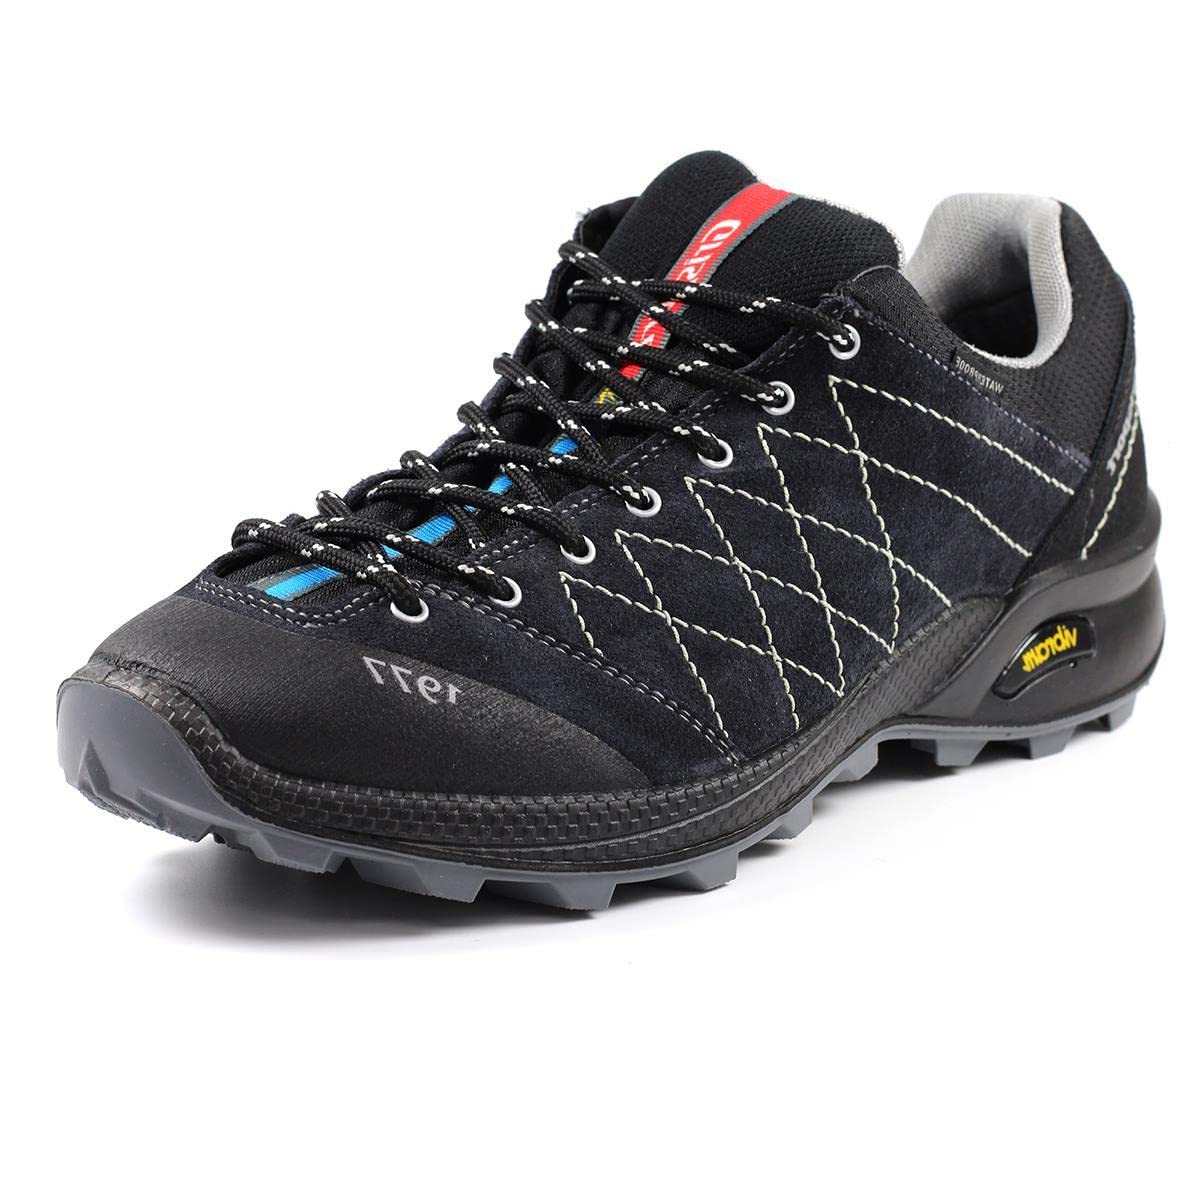 Grisport Mens Argon Grey Walking Shoe - Size 9 UK - Grey